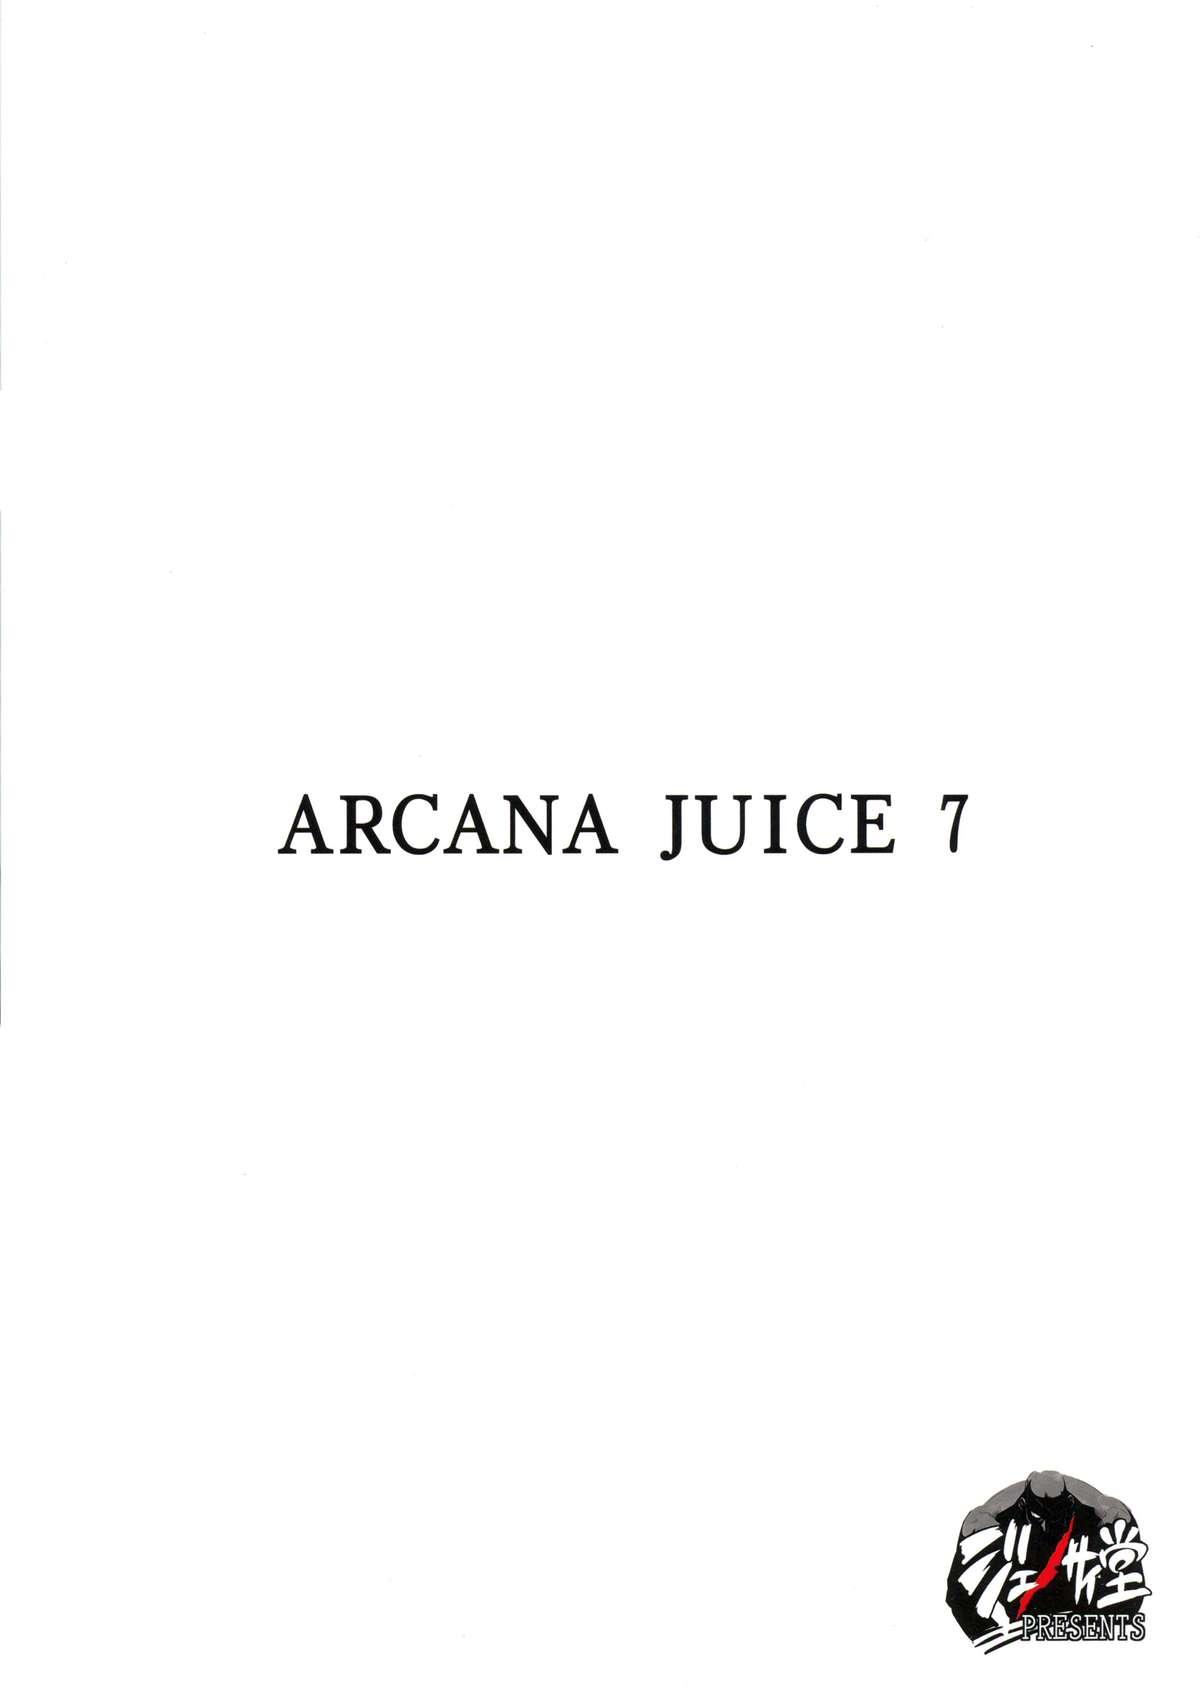 ARCANA JUICE FINAL 25